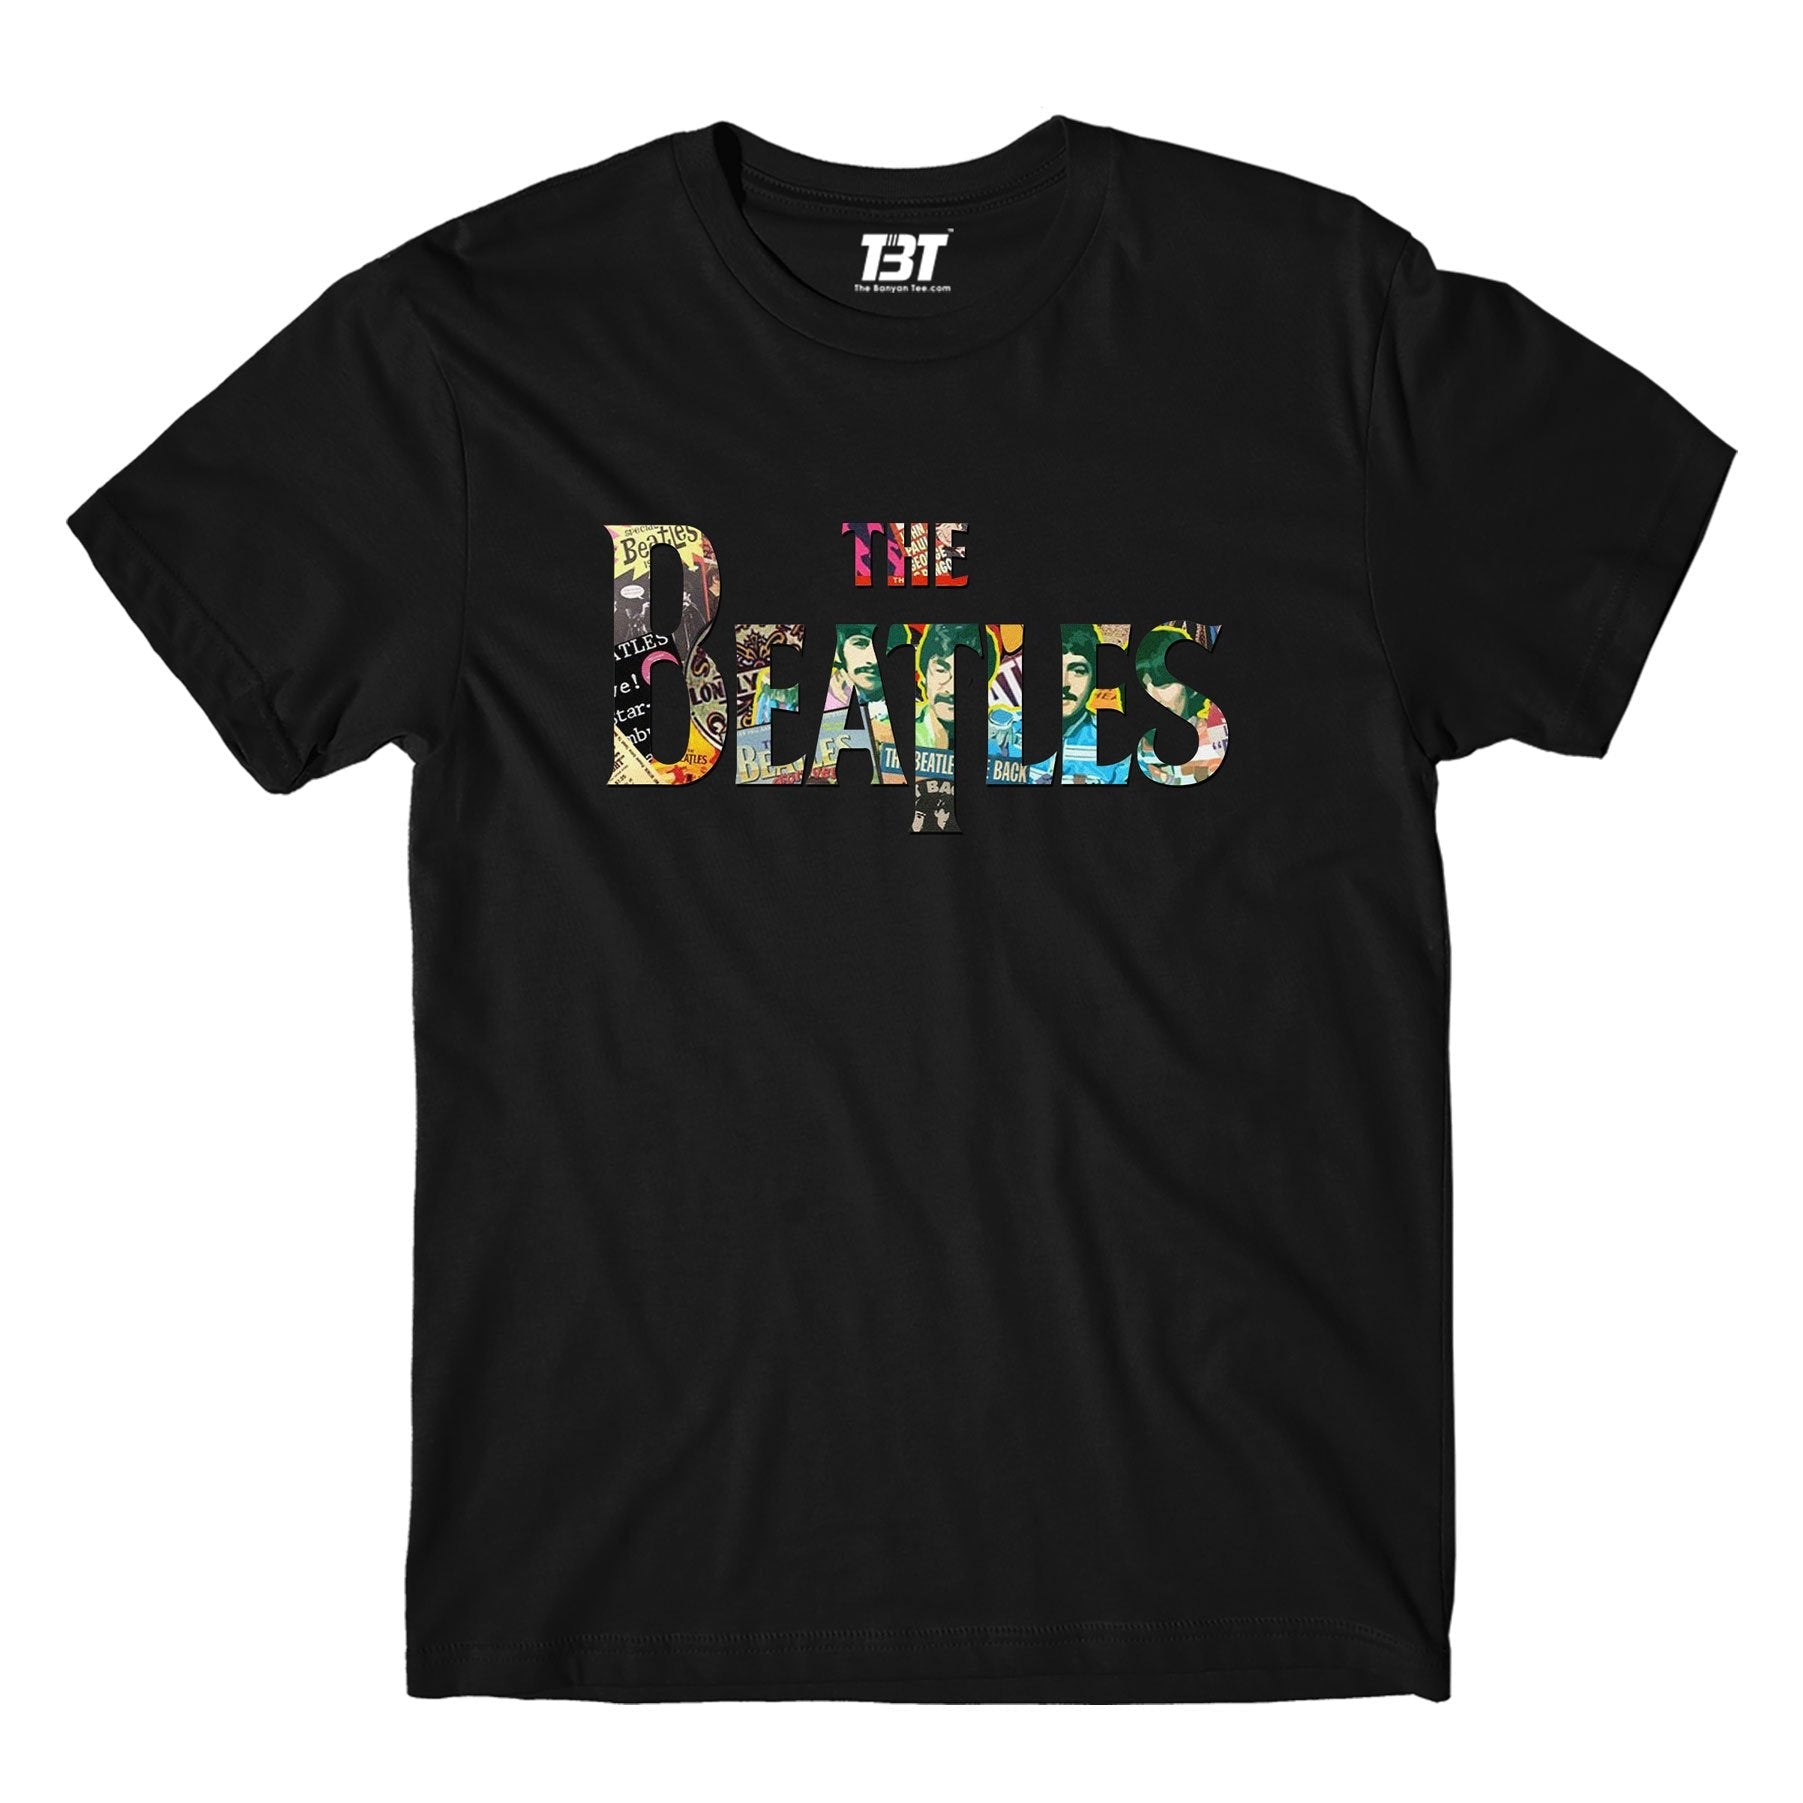 The Beatles T-shirt T-shirt The Banyan Tee TBT shirt for men women boys designer stylish online cotton usa united states